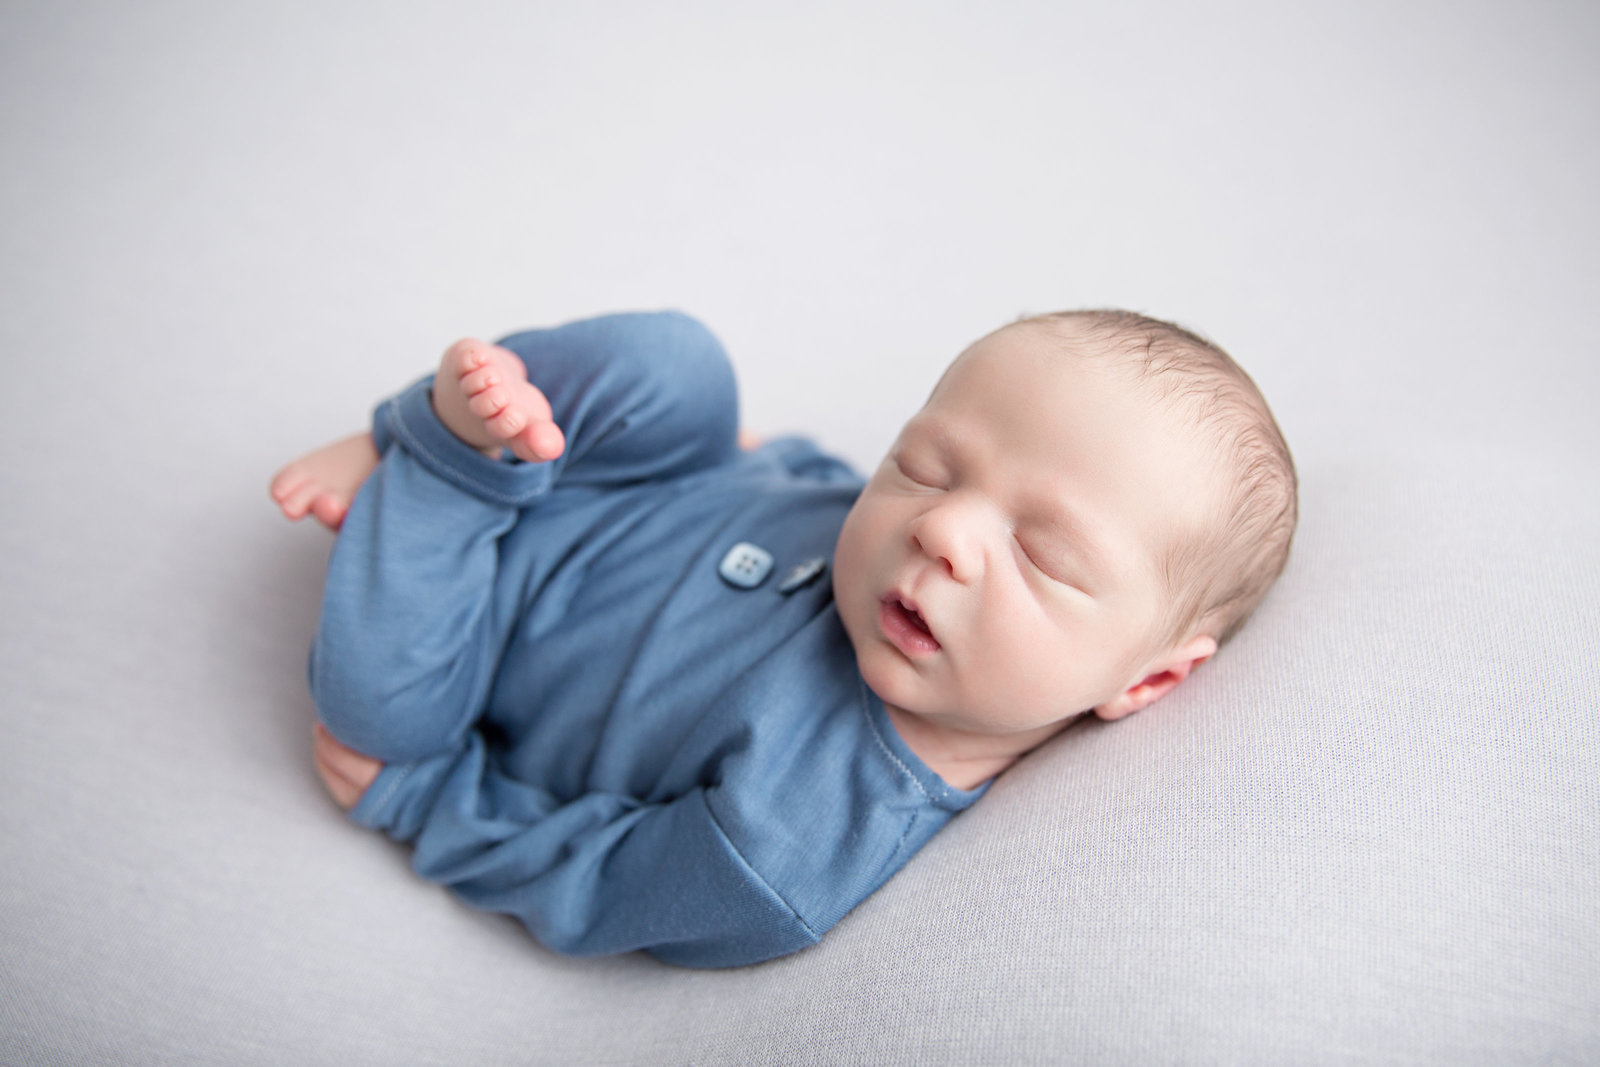 sleeping newborn baby wearing blue outfit on light grey fabric